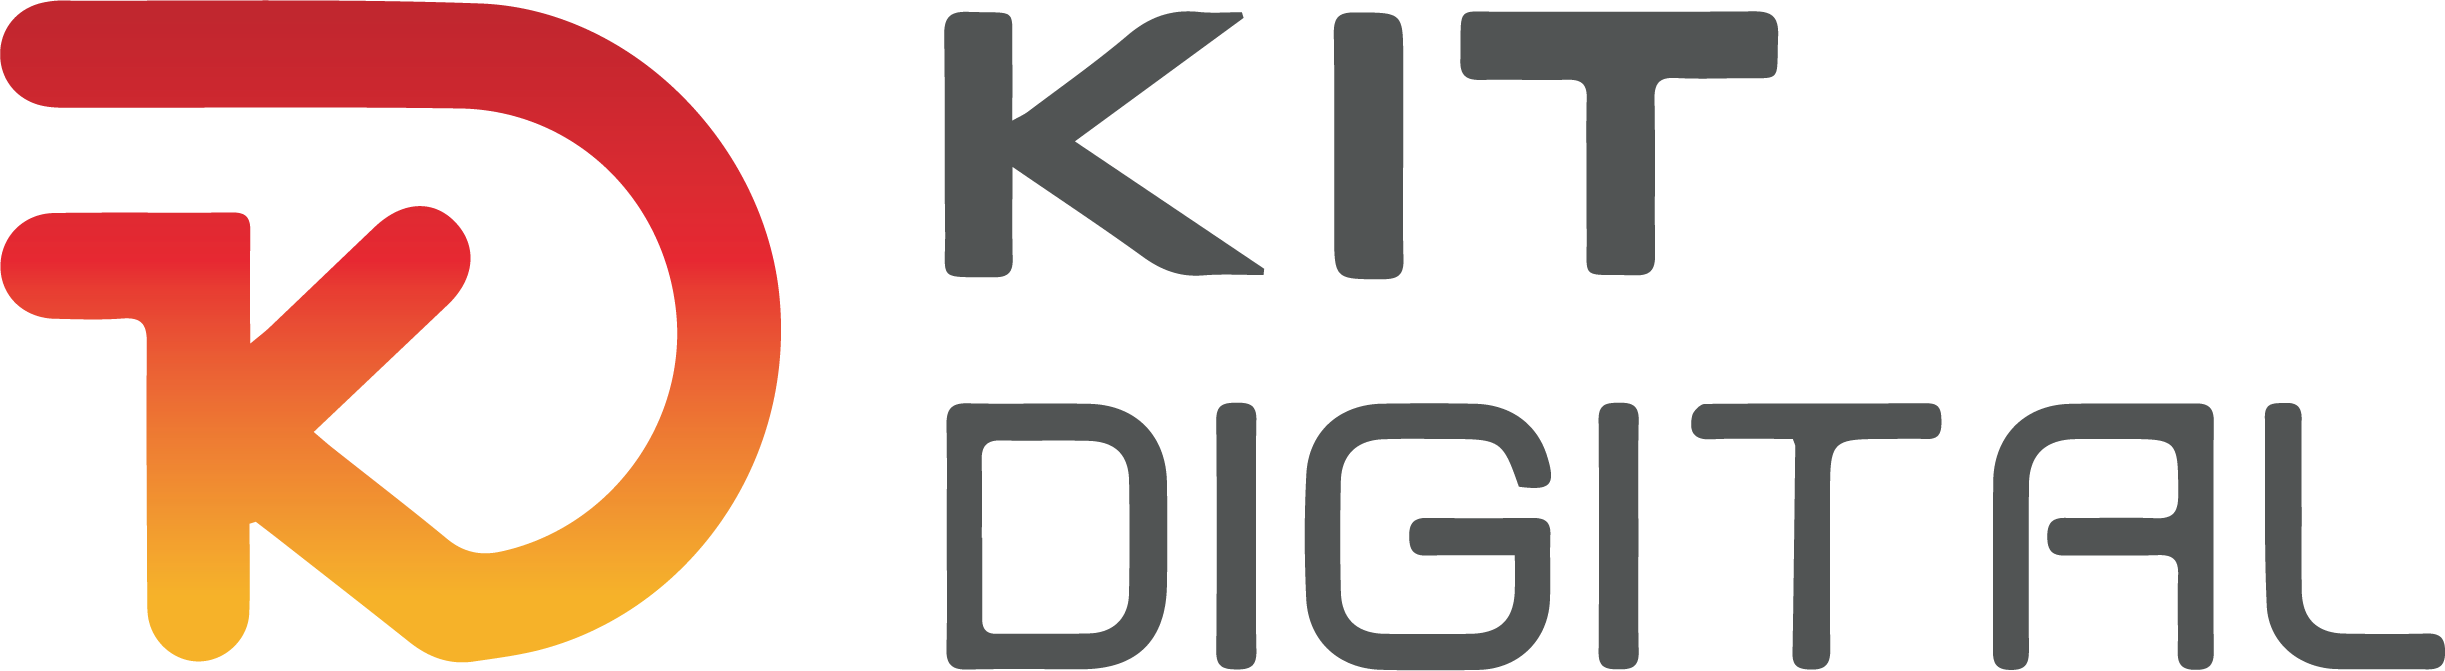 Solicitar Kit Digital